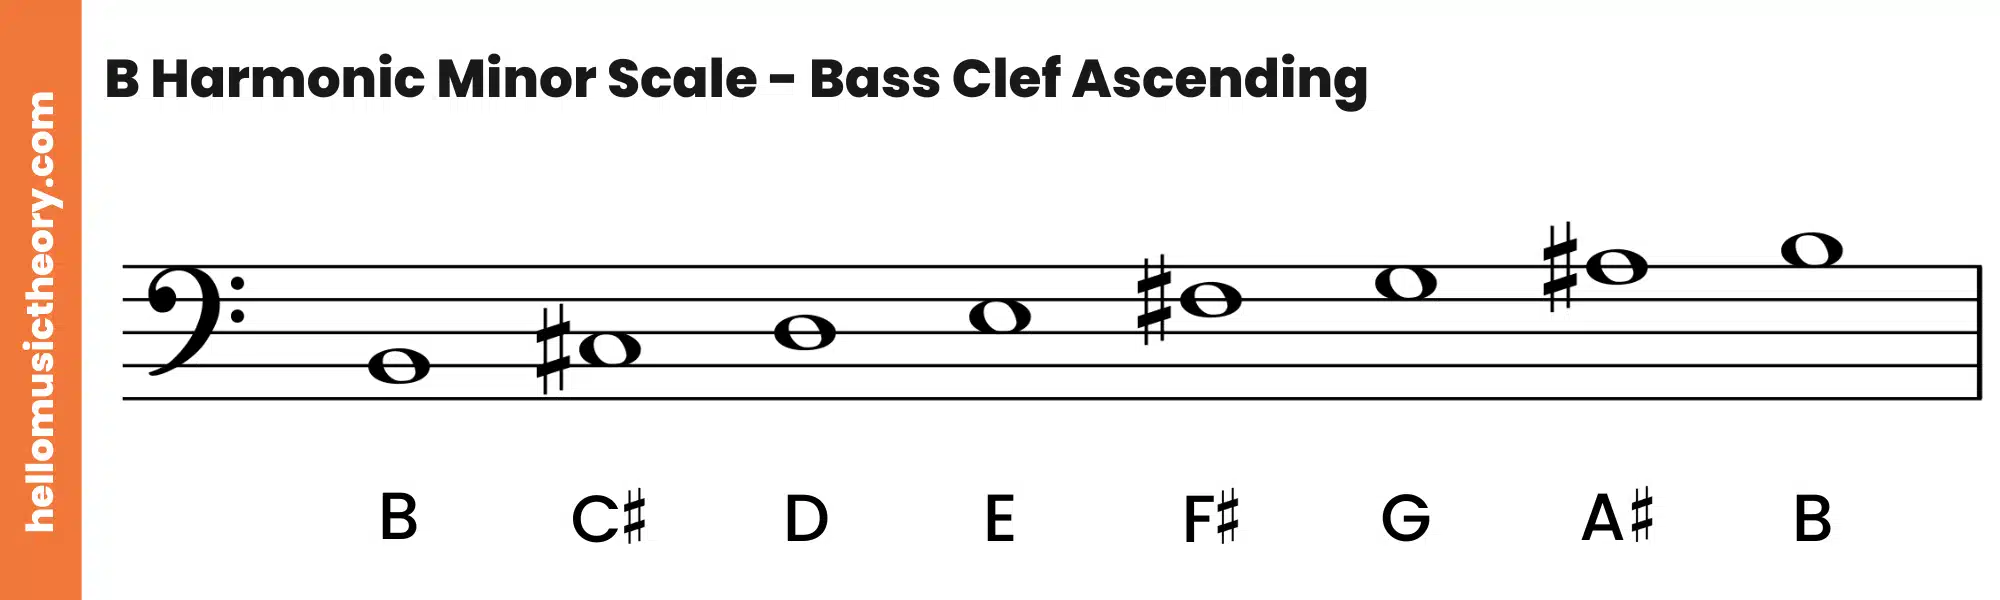 B Harmonic Minor Scale Bass Clef Ascending